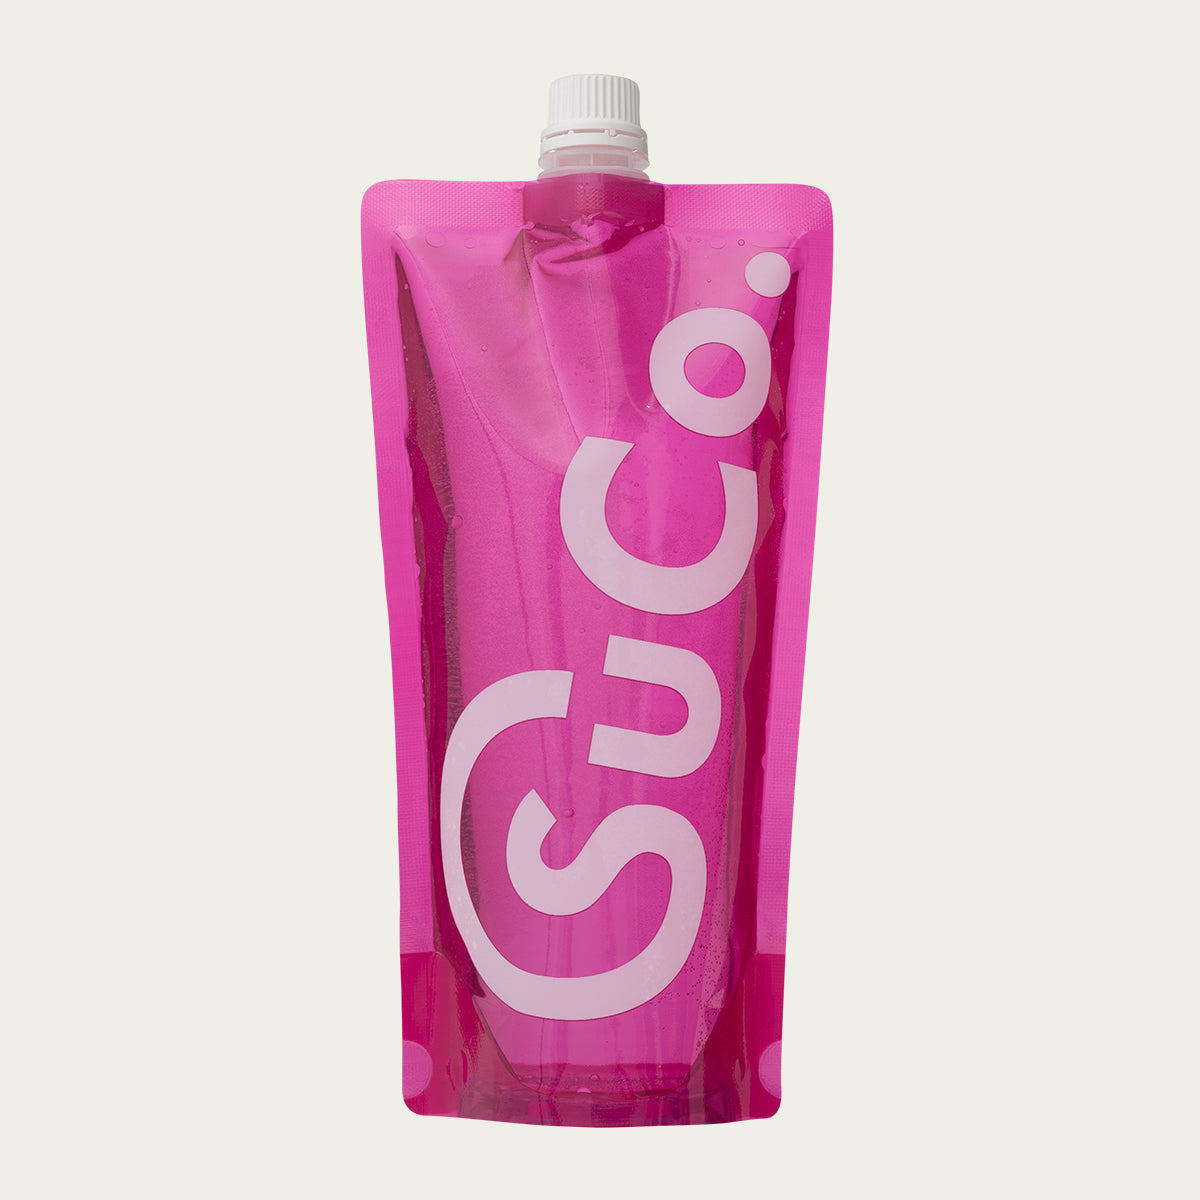 Pembe SuCo 2.0 - 600 ml